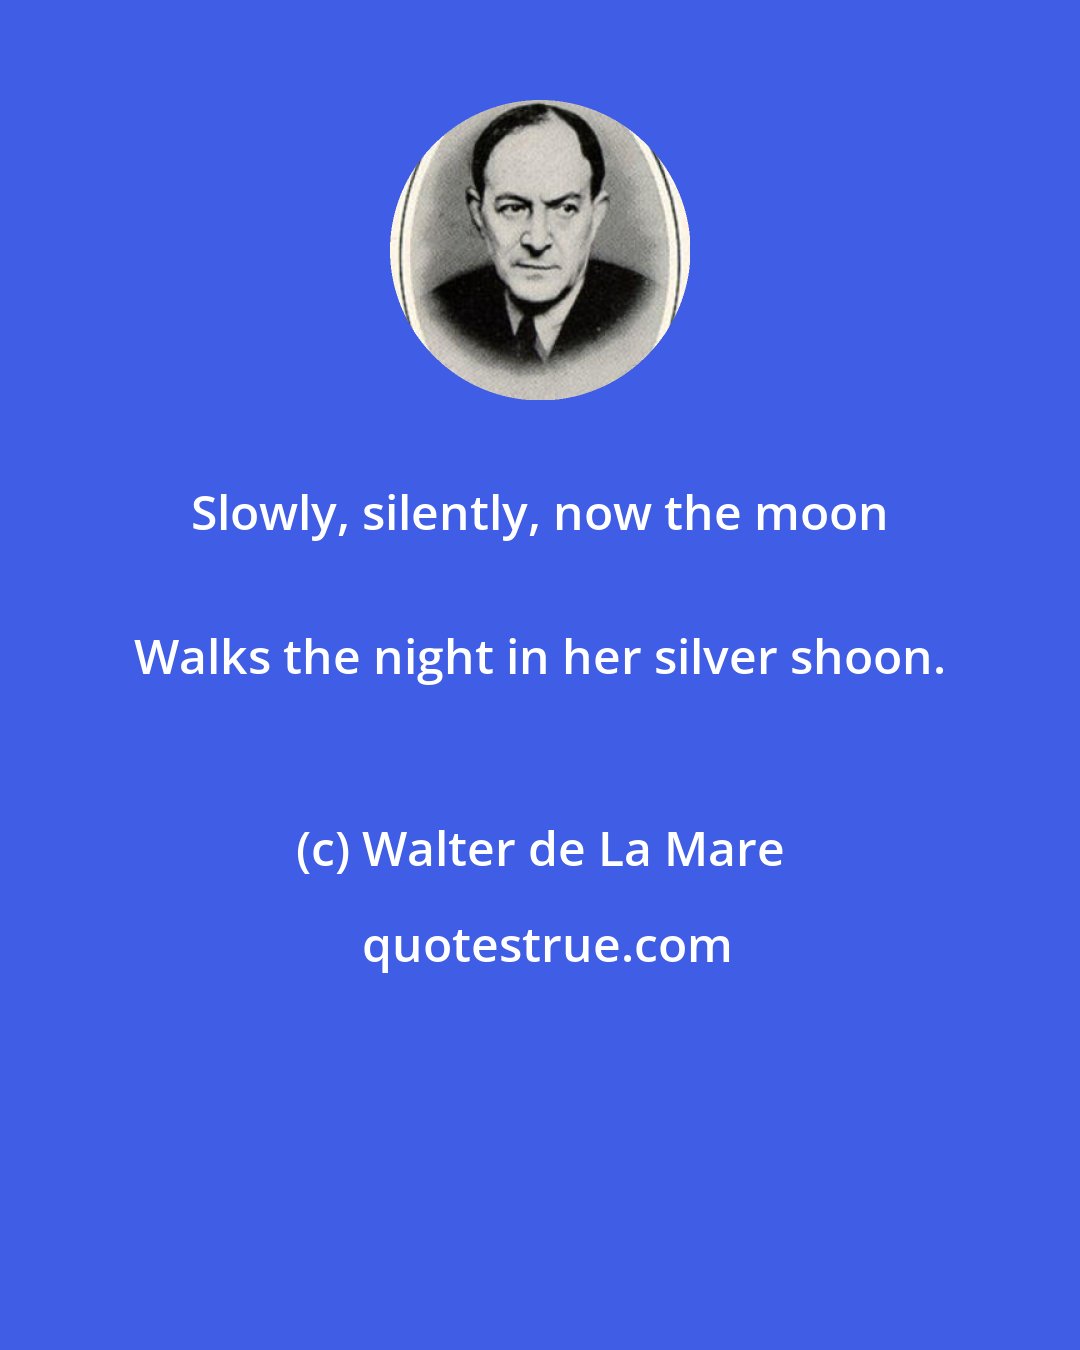 Walter de La Mare: Slowly, silently, now the moon 
 Walks the night in her silver shoon.